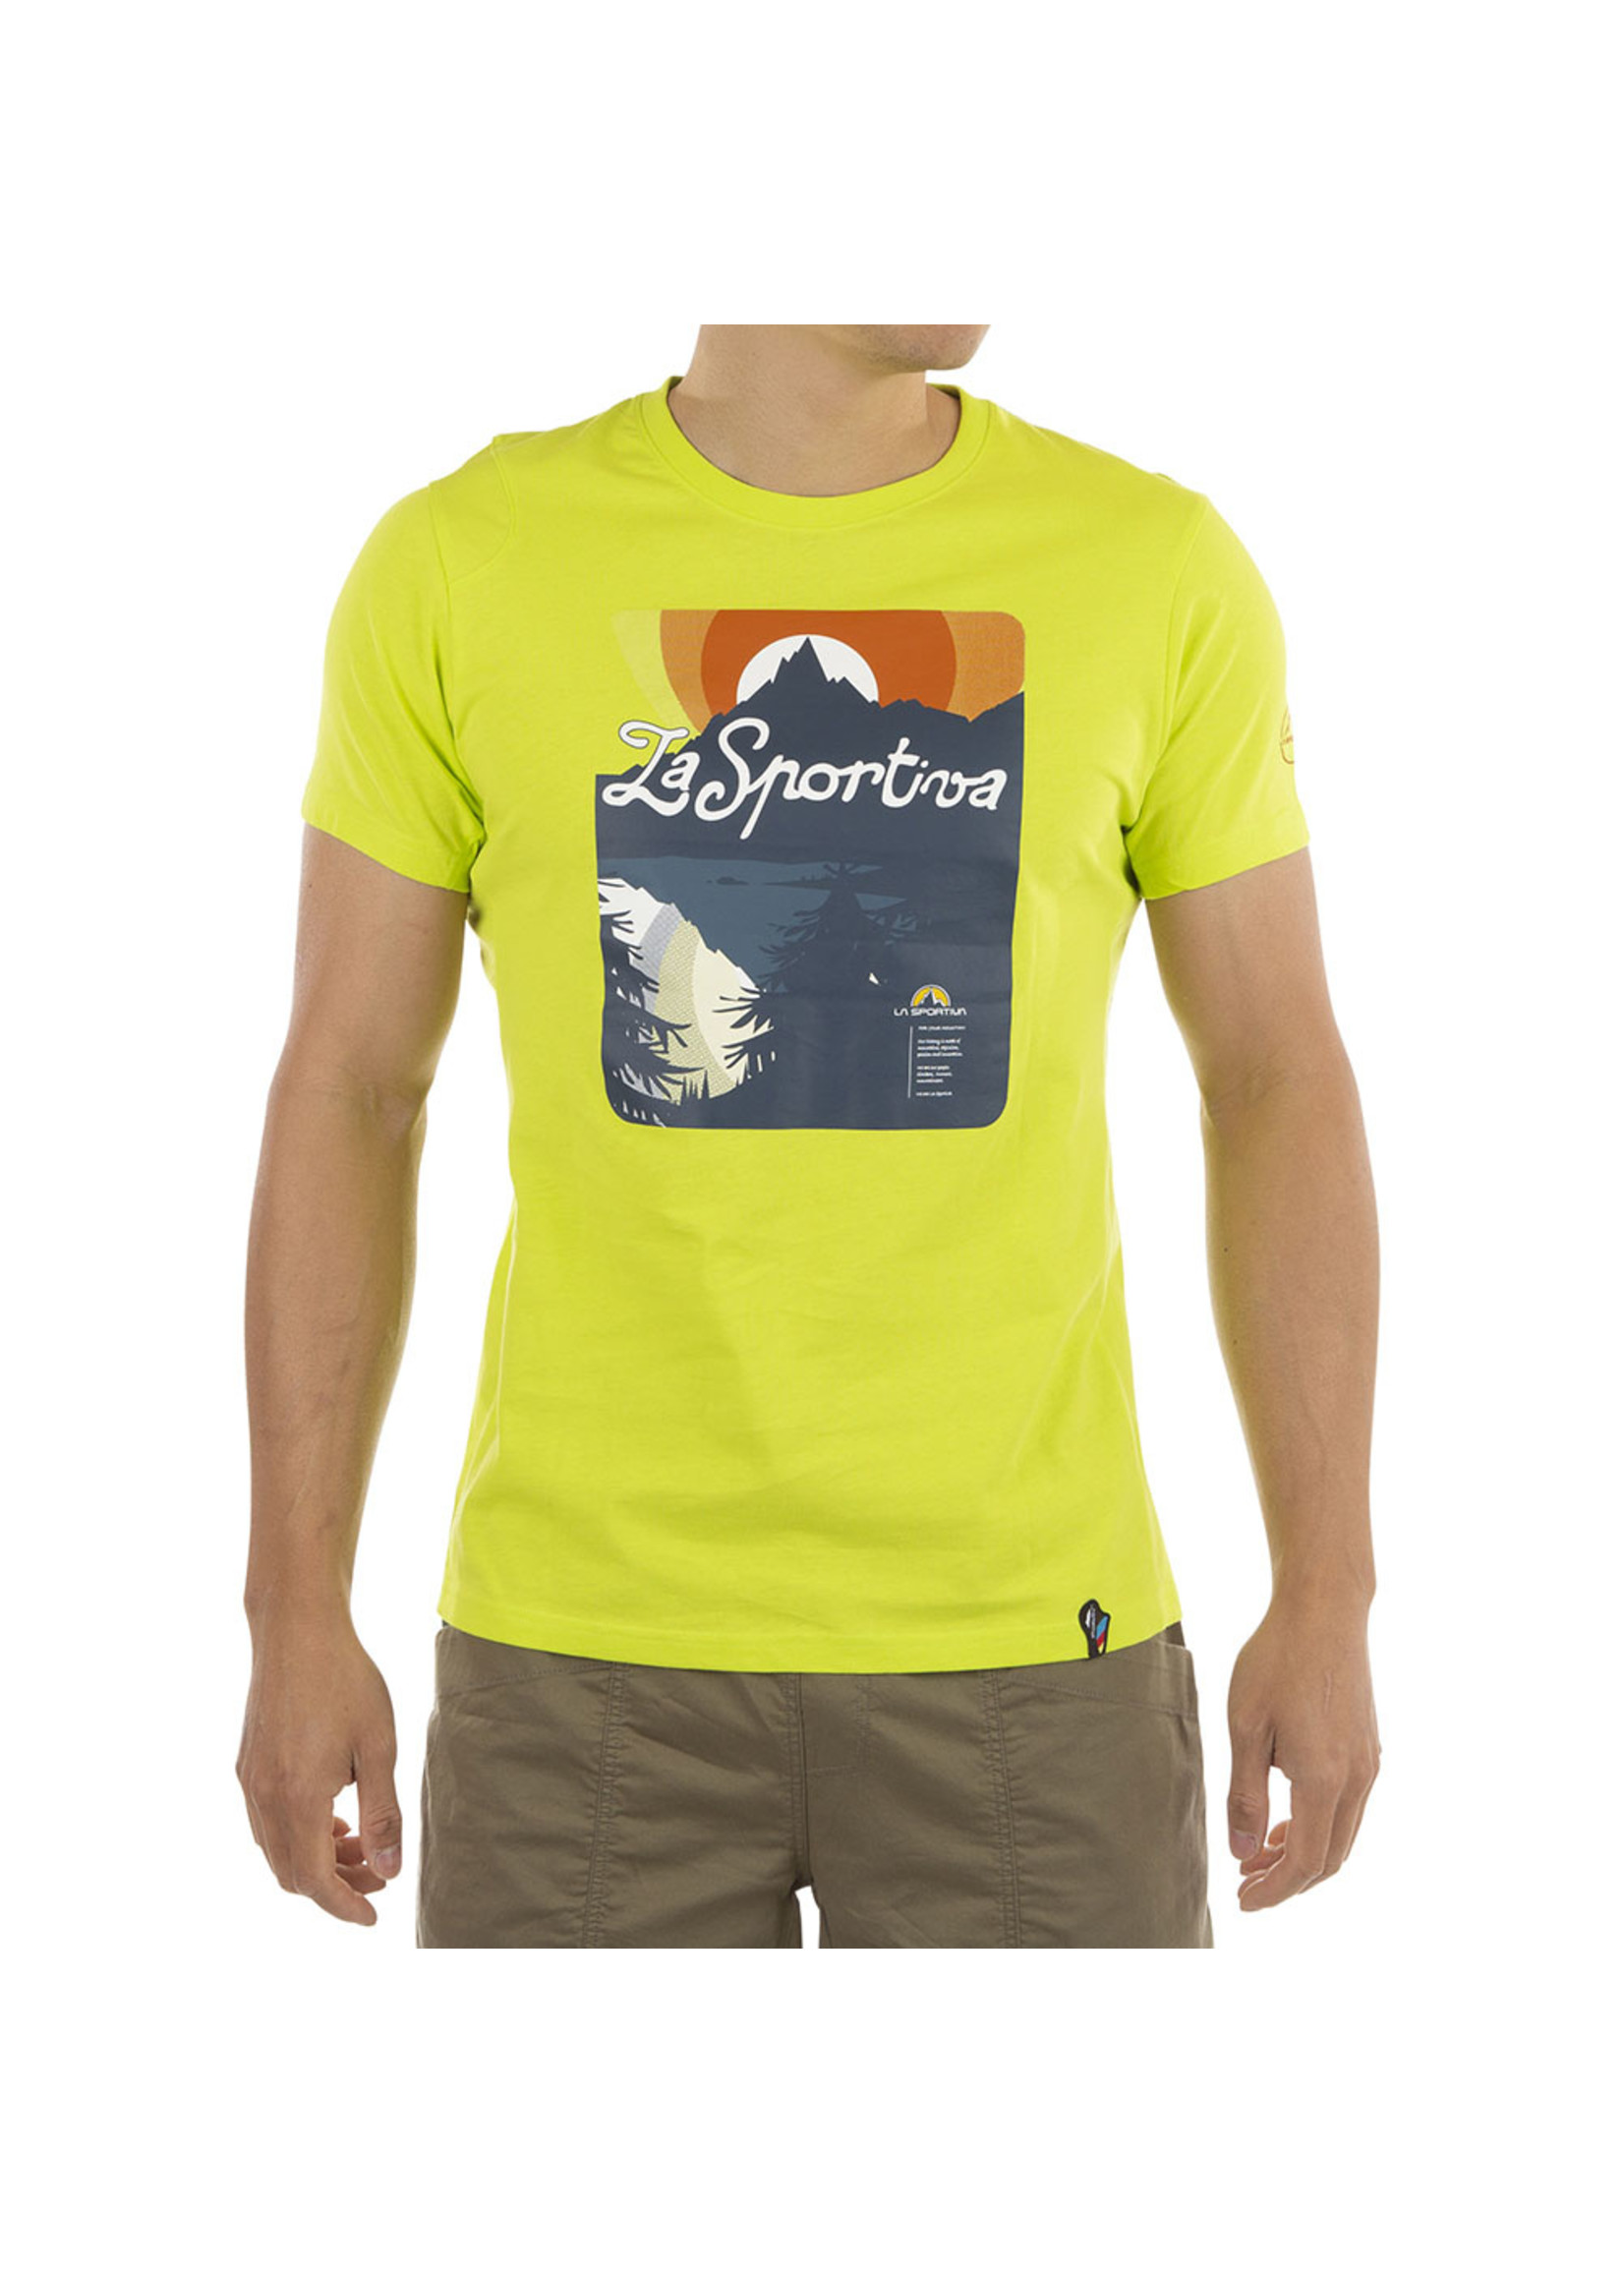 La Sportiva La Sportiva Lakeview T-Shirt - Men